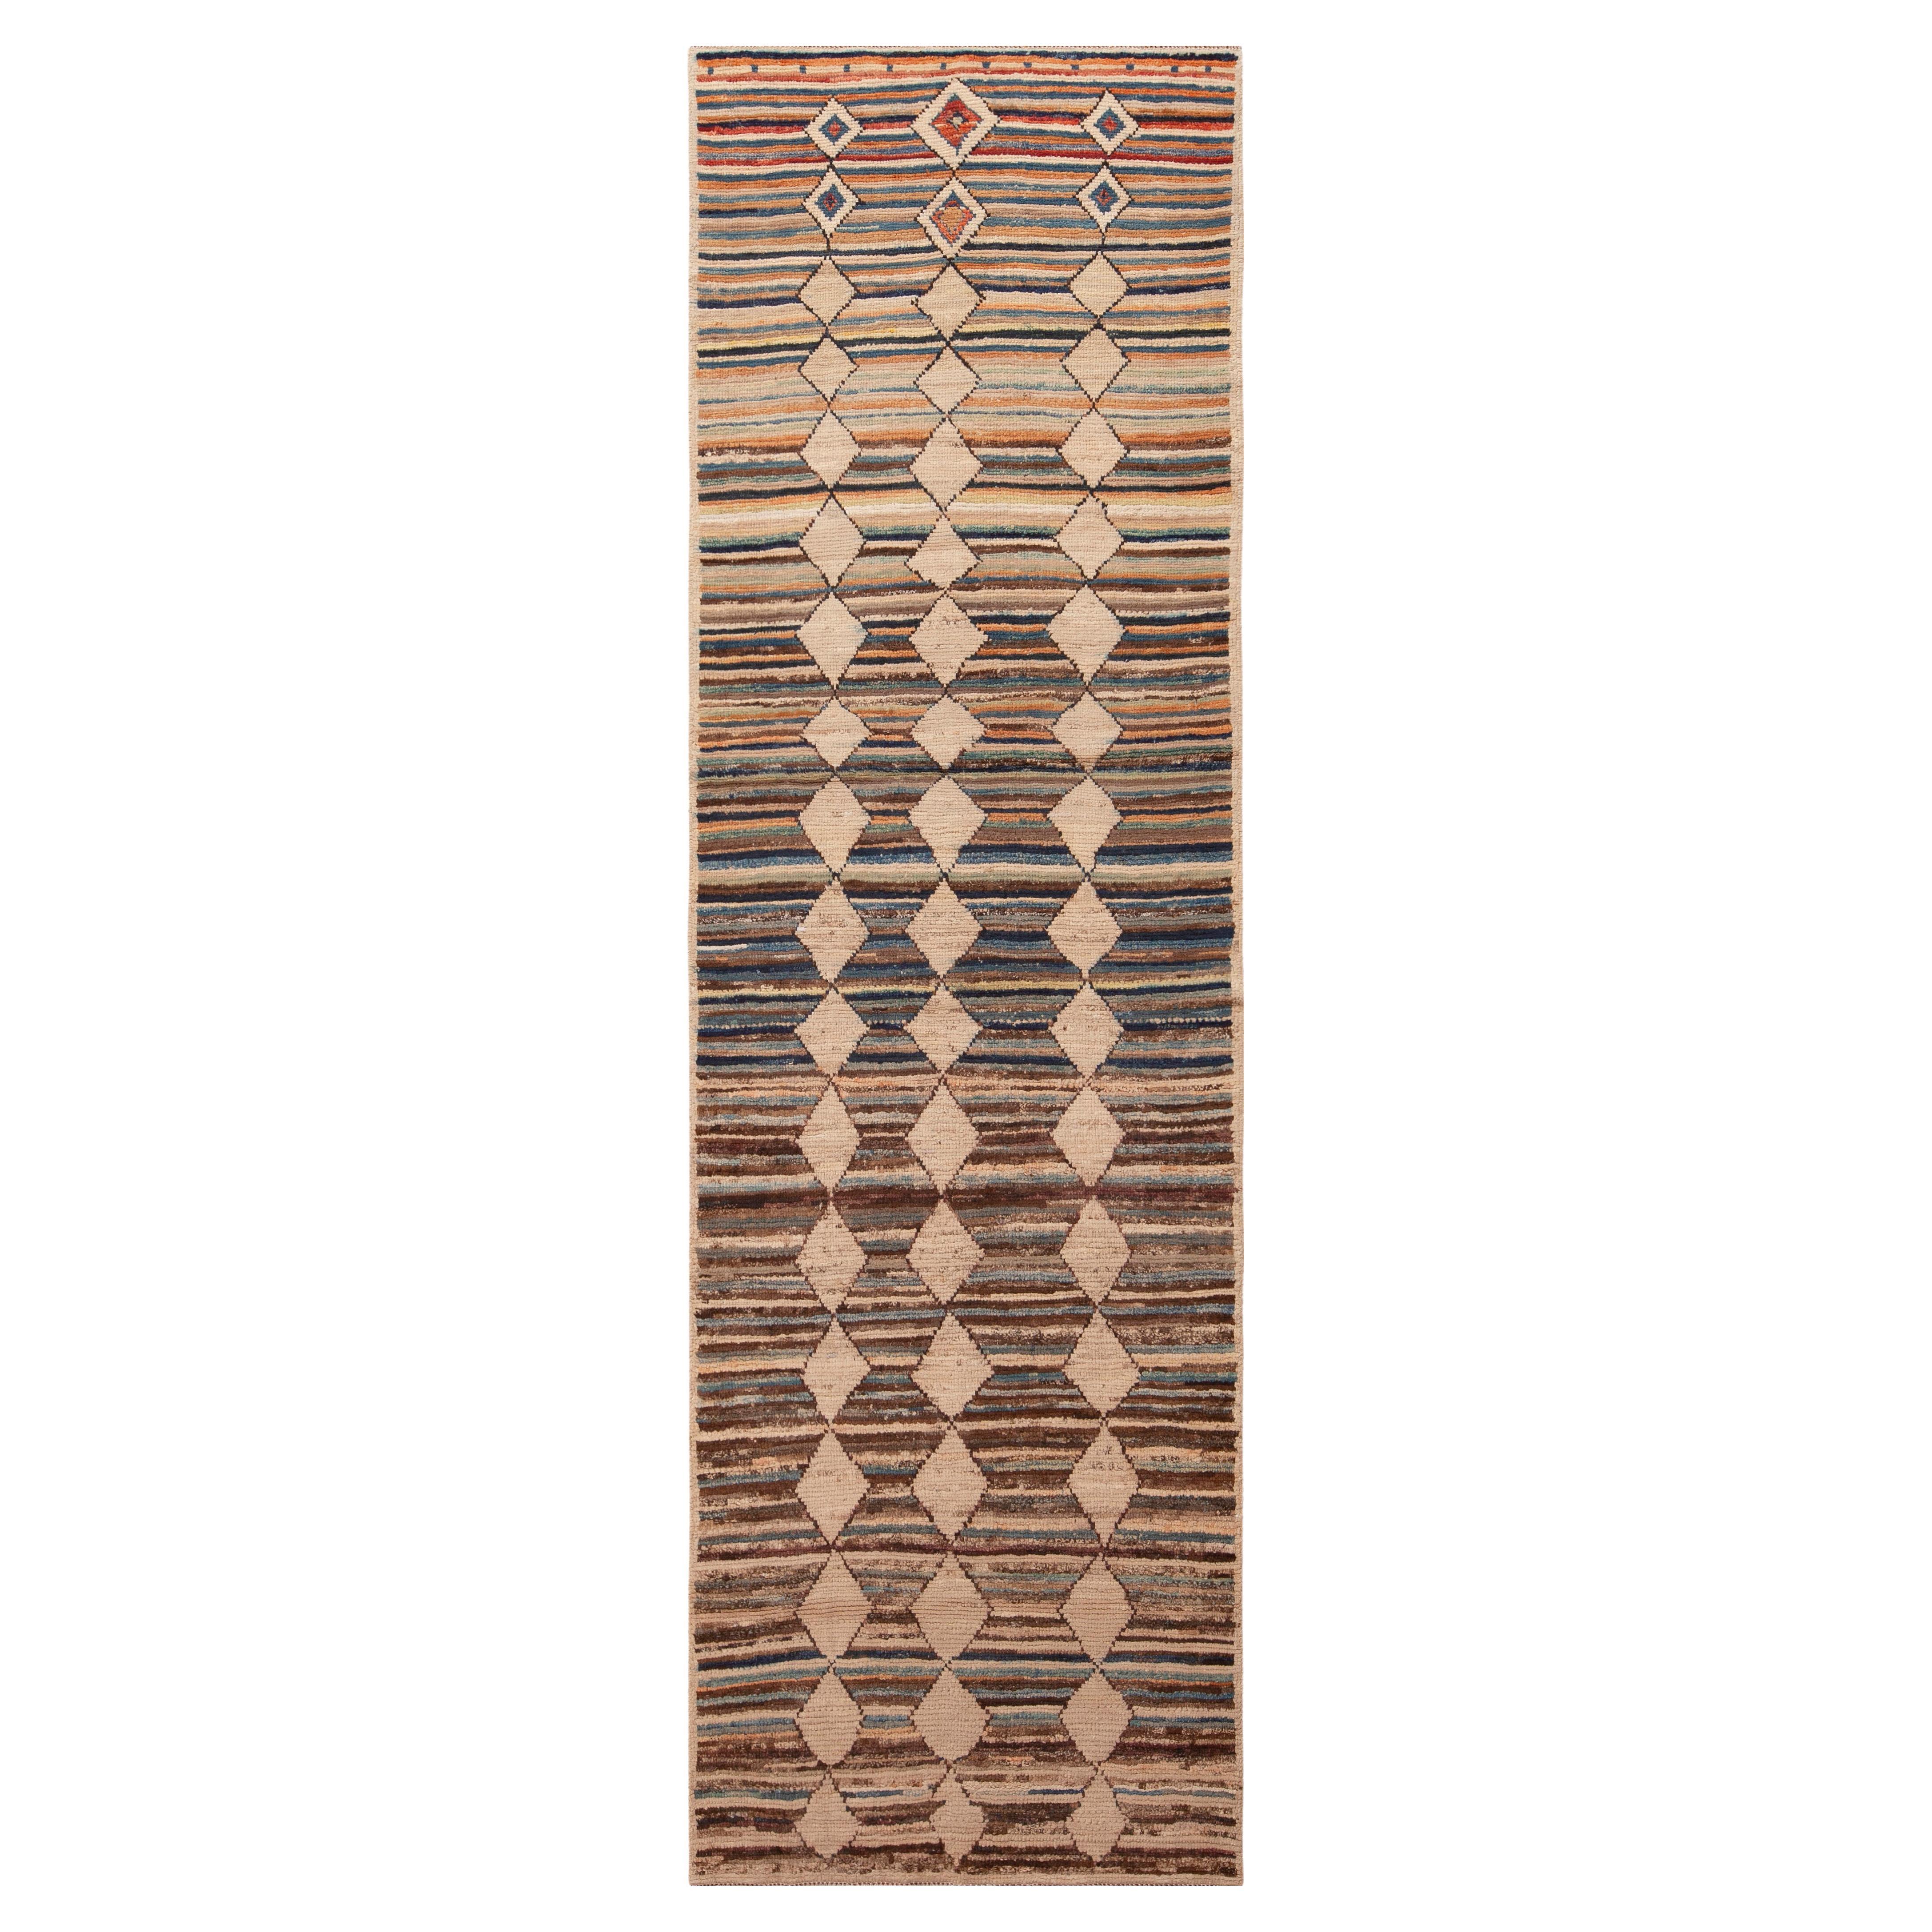 Nazmiyal Collection Modern Tribal Geometric Hallway Runner Rug 2'10" x 9'6" For Sale